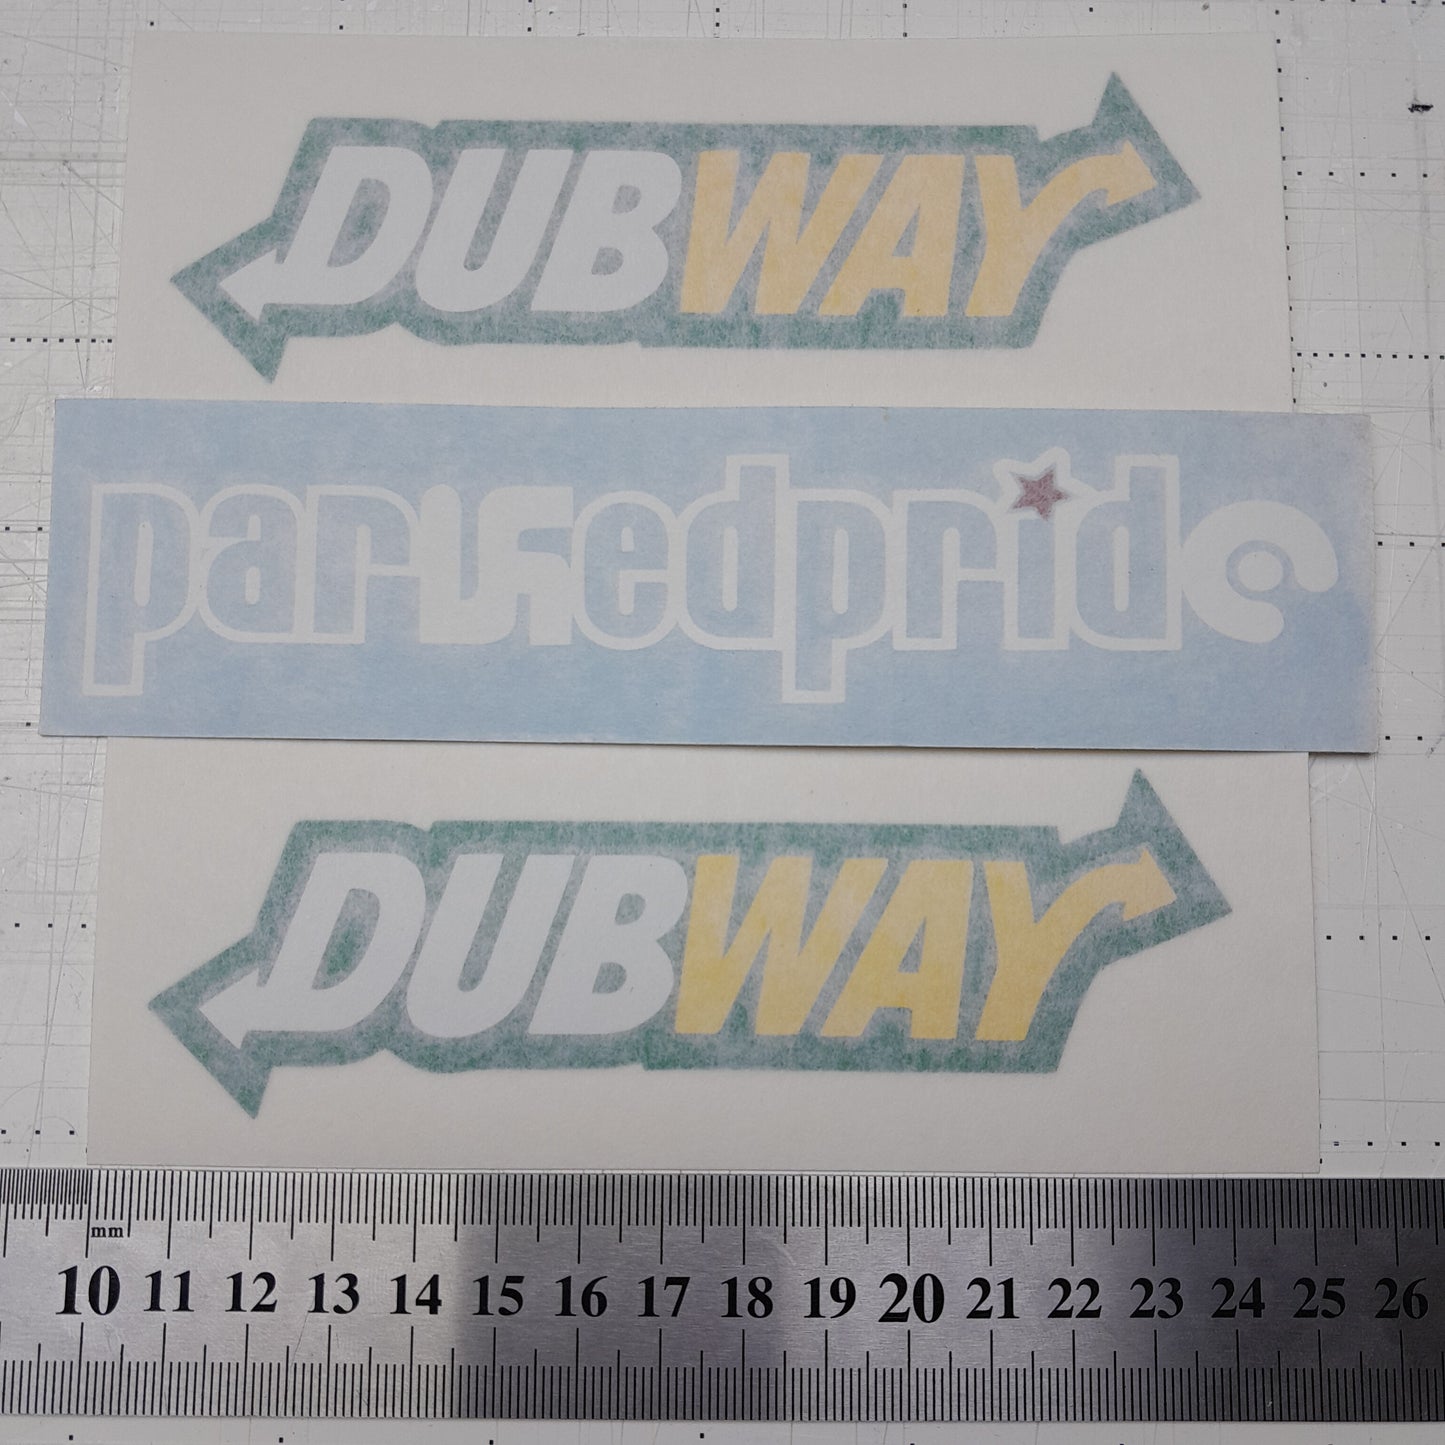 Dubway (Subway mock) Vinyl Layered Car Sticker